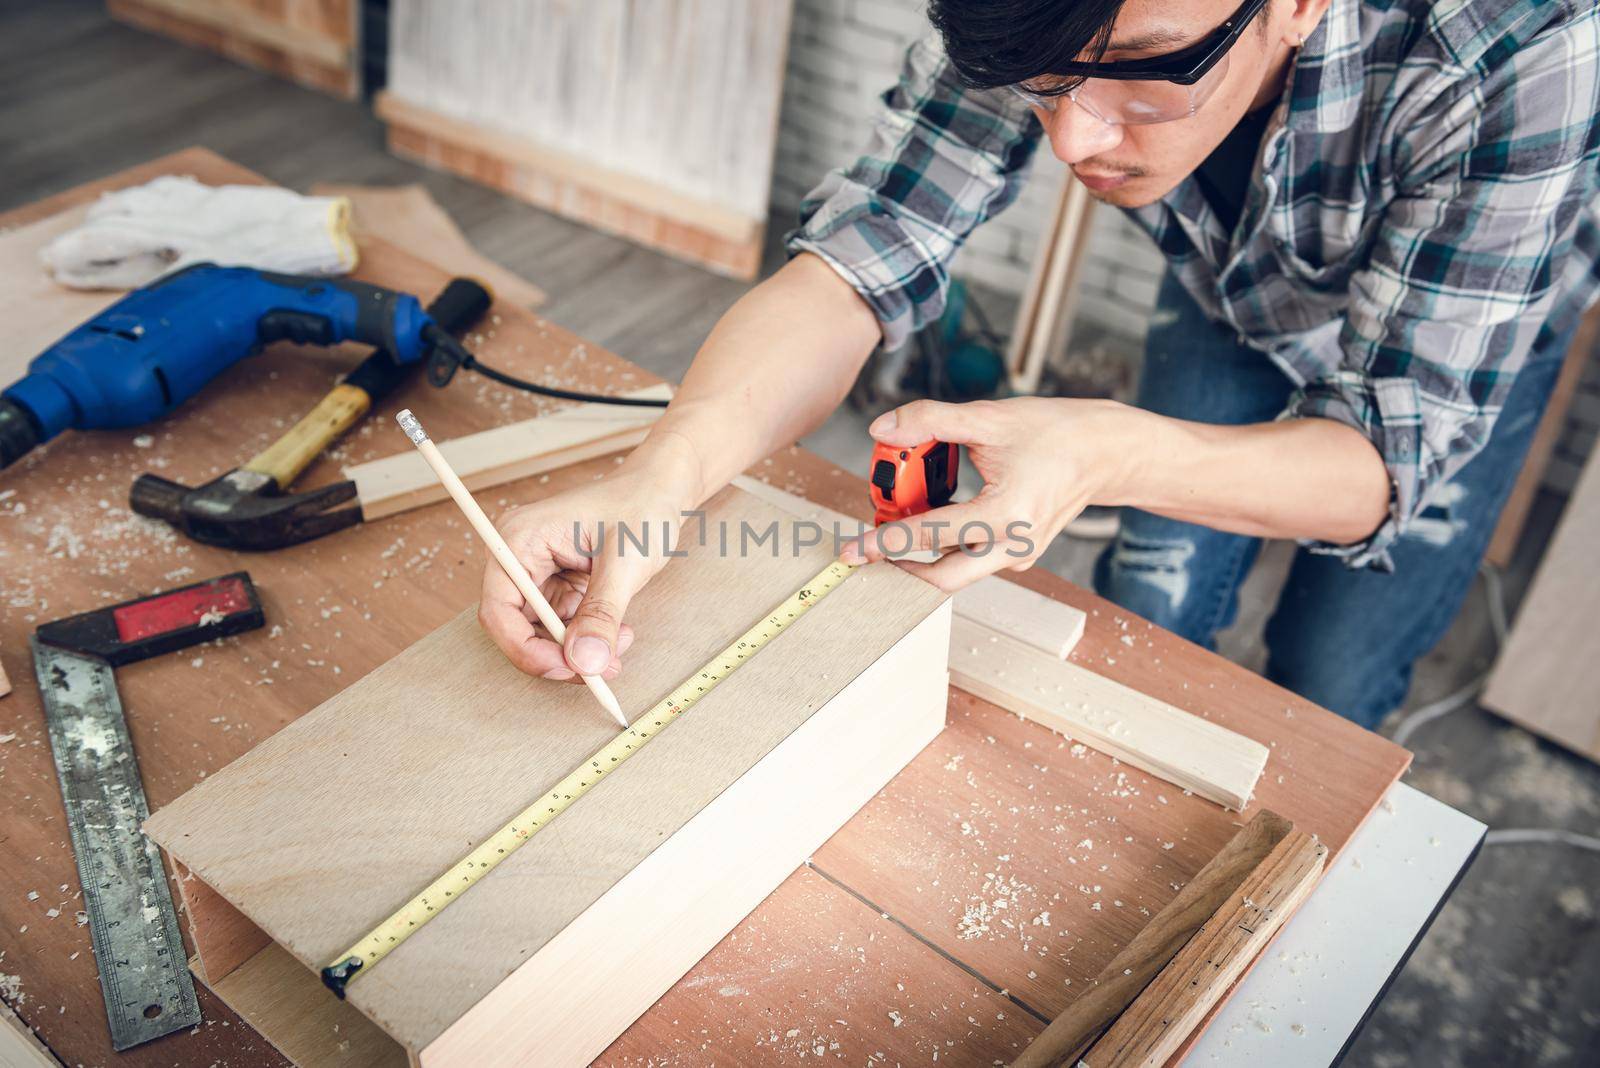 Carpenter Man is Working Timber Woodworking in Carpentry Workshops, Craftsman is Using Tape Measure to Measuring Timber Frame for Wooden Furniture in Workshop. DIY Workmanship, Job Occupation Concept.